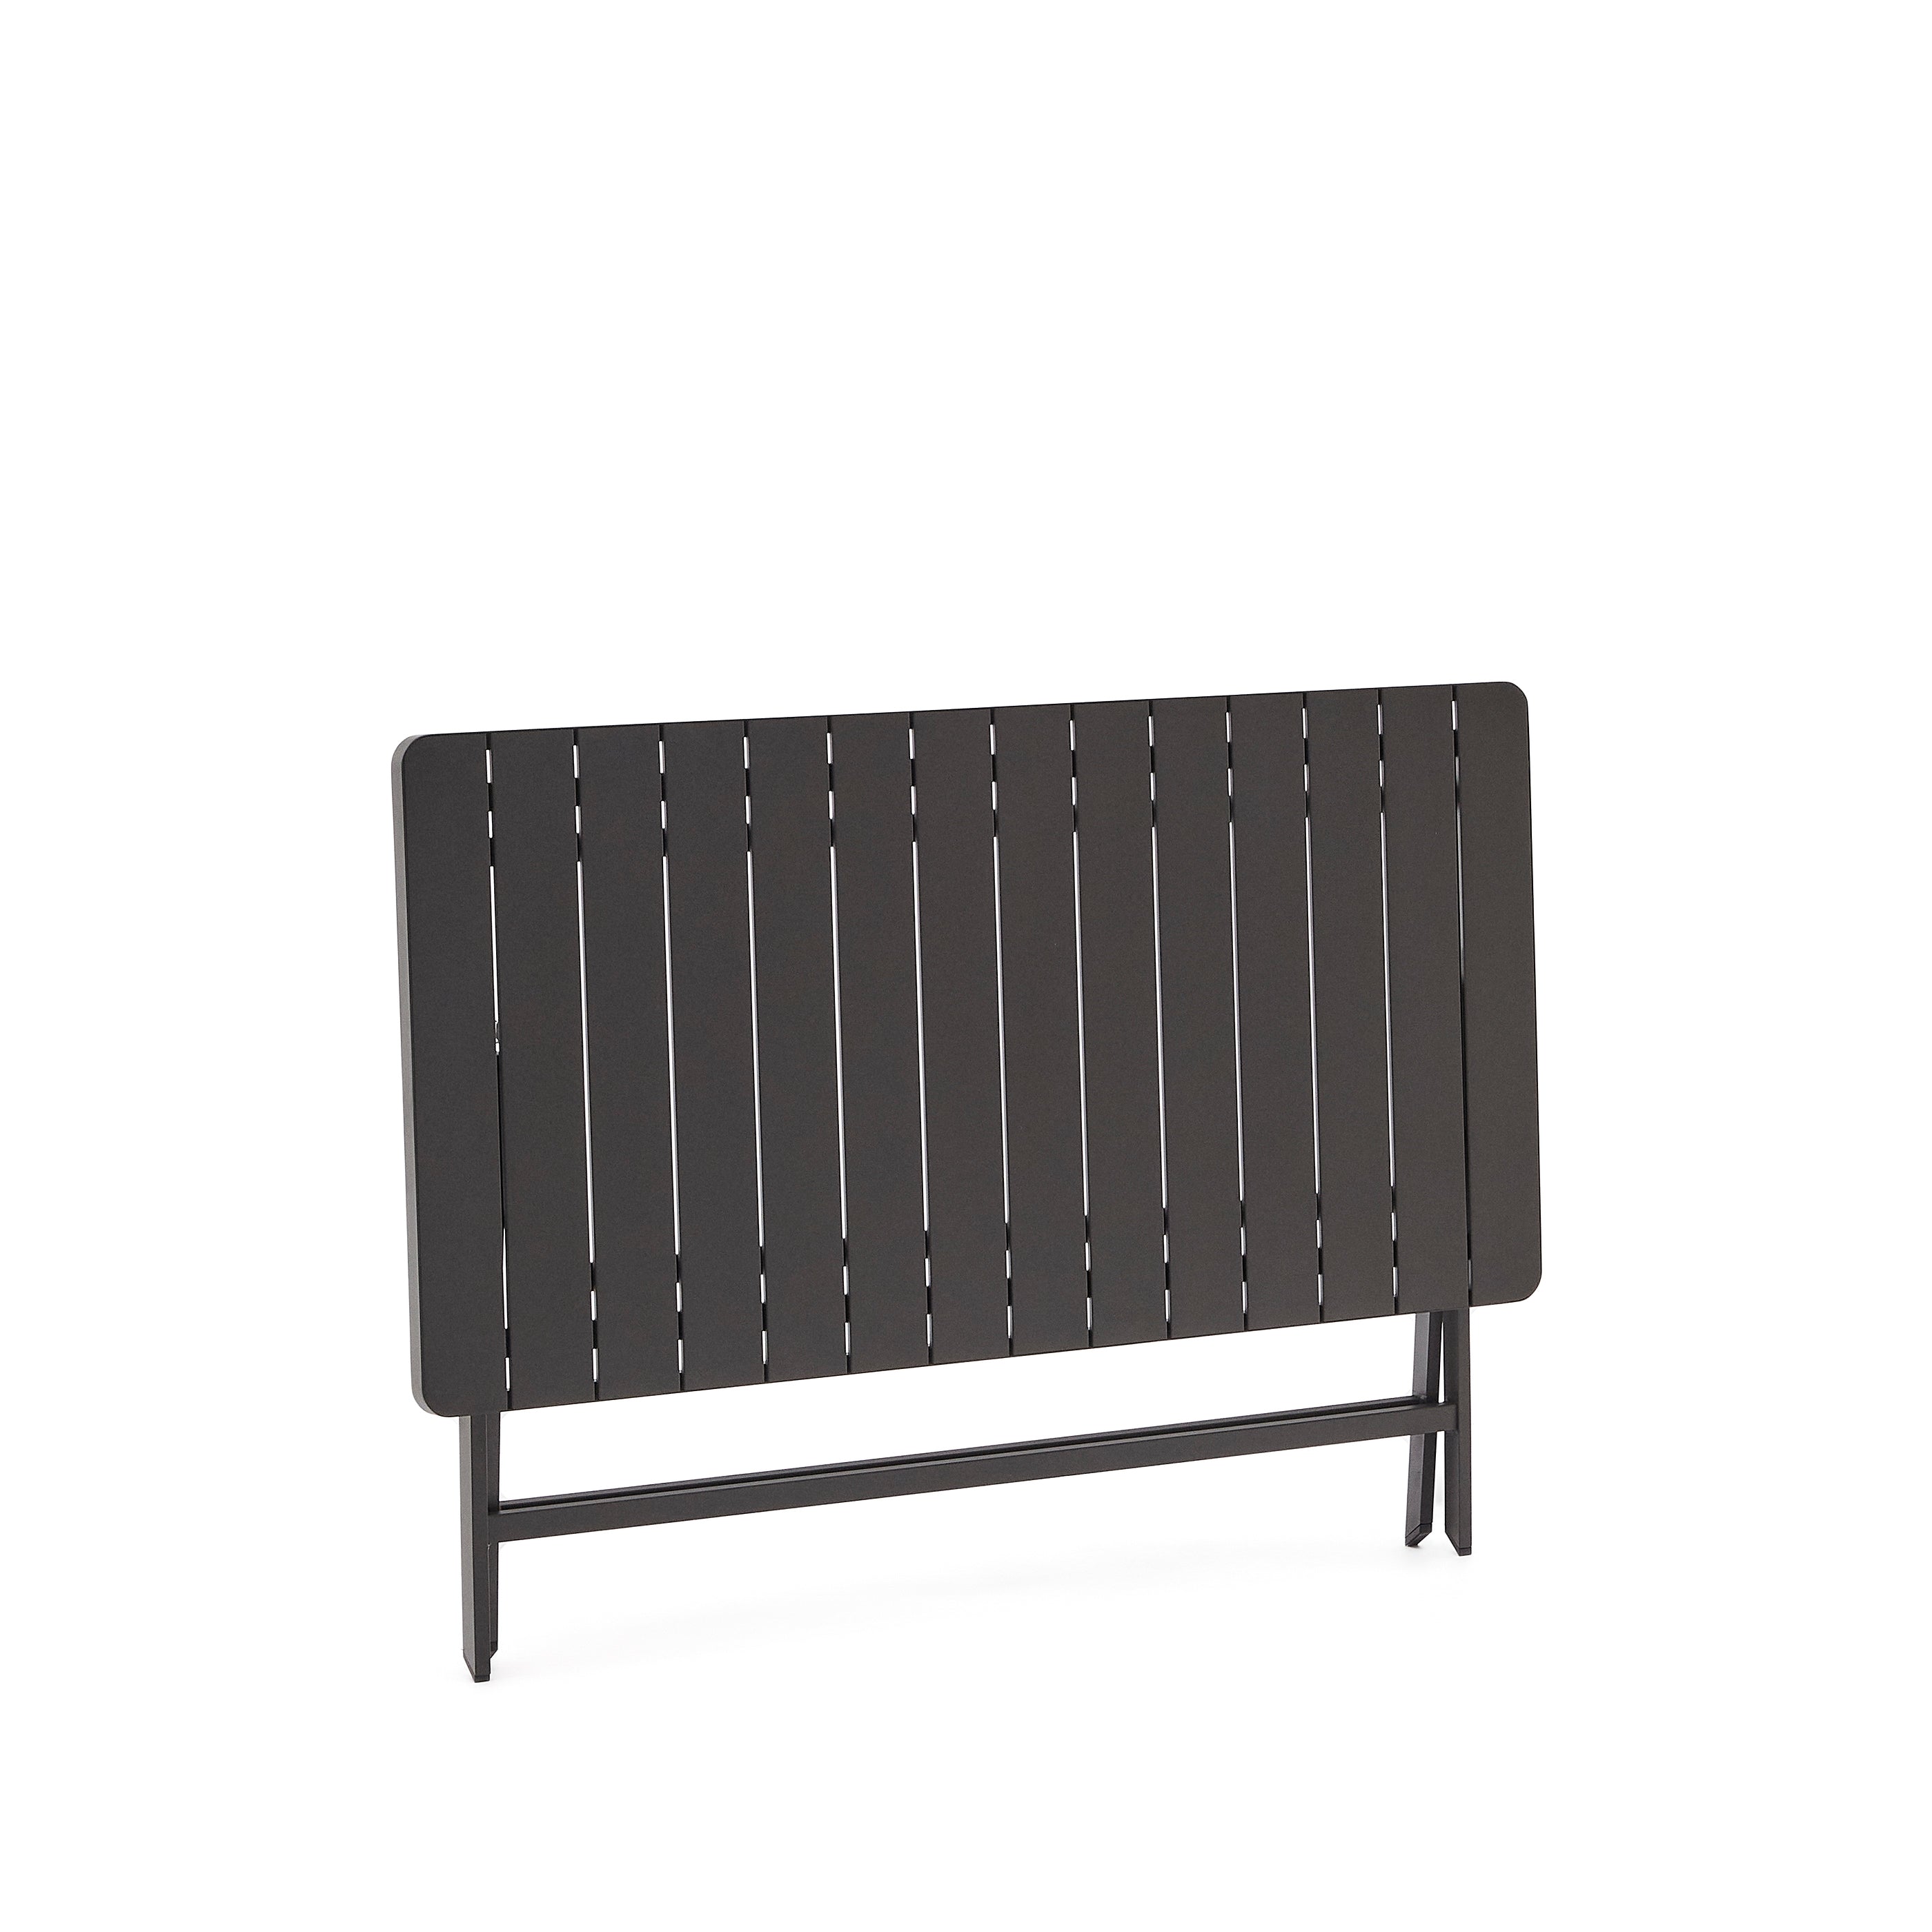 Torreta folding outdoor table made of aluminum, black coating 140 x 70 cm